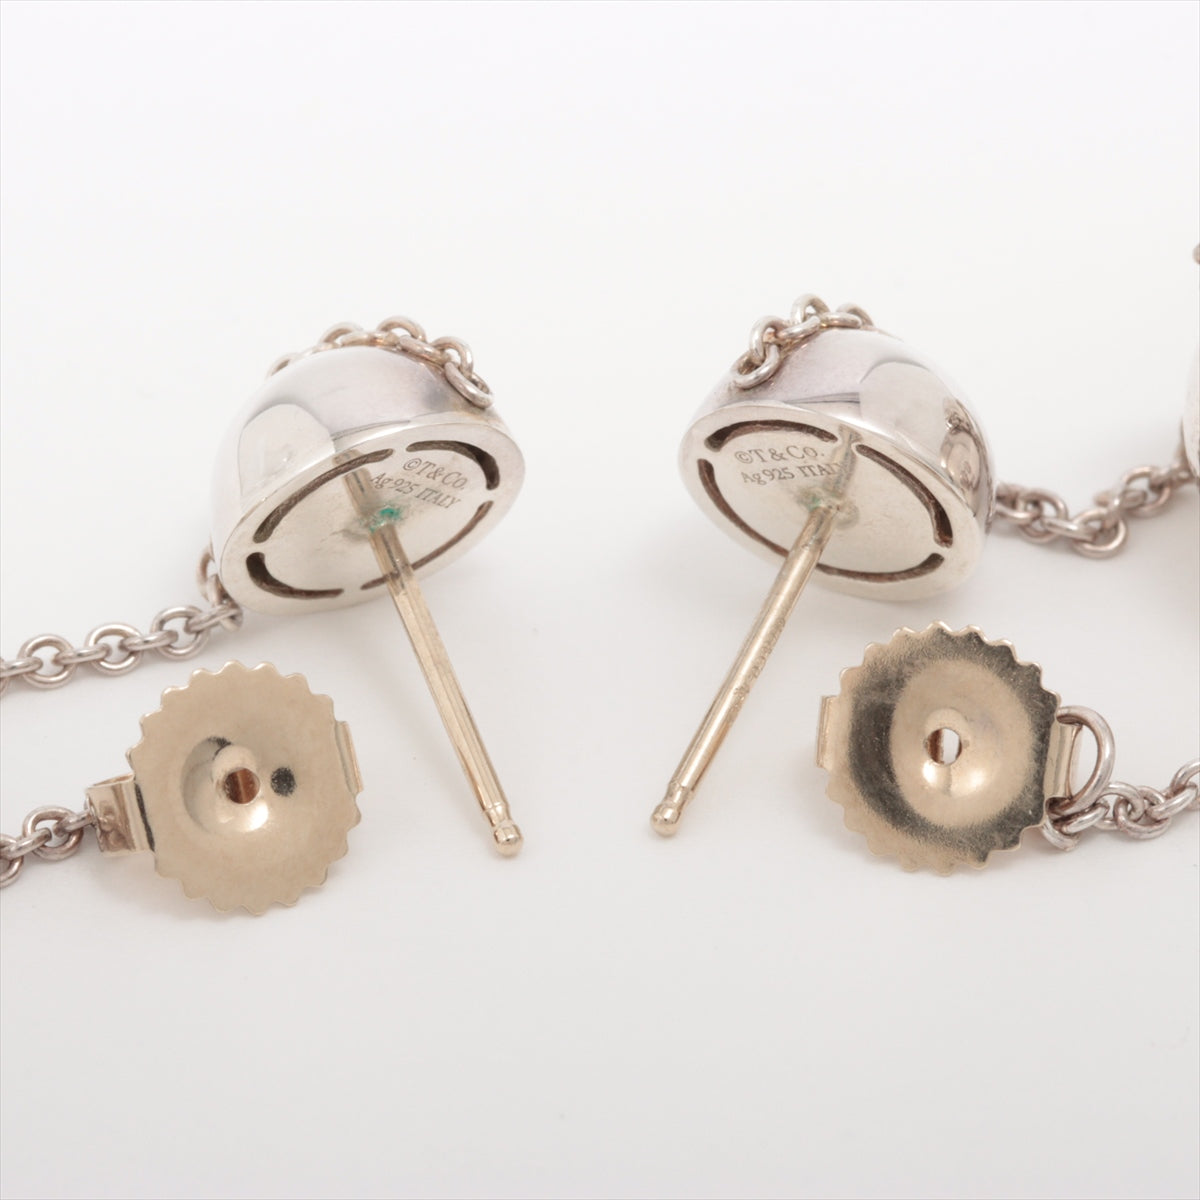 Tiffany Hardware triple drop Piercing jewelry (for both ears) 925 8.3g Silver